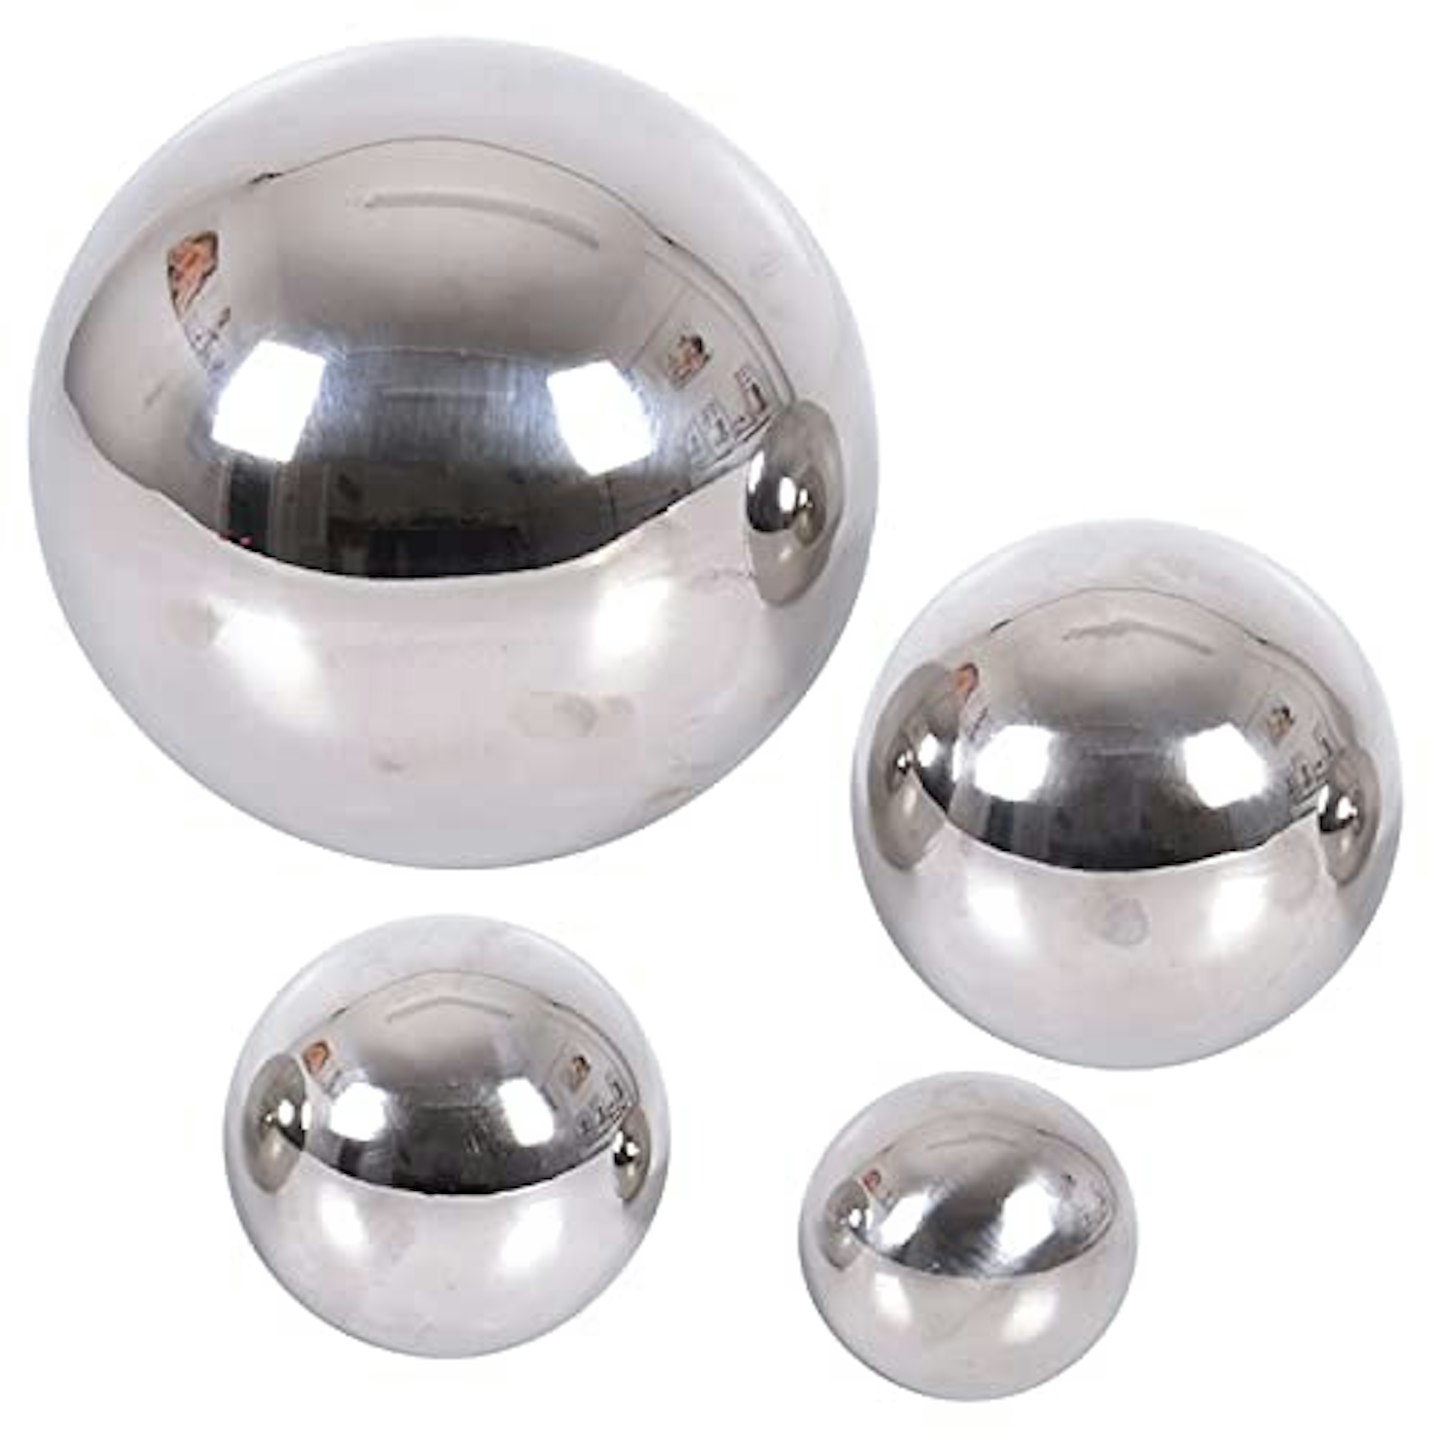 TickiT Silver Sensory Reflective Ball